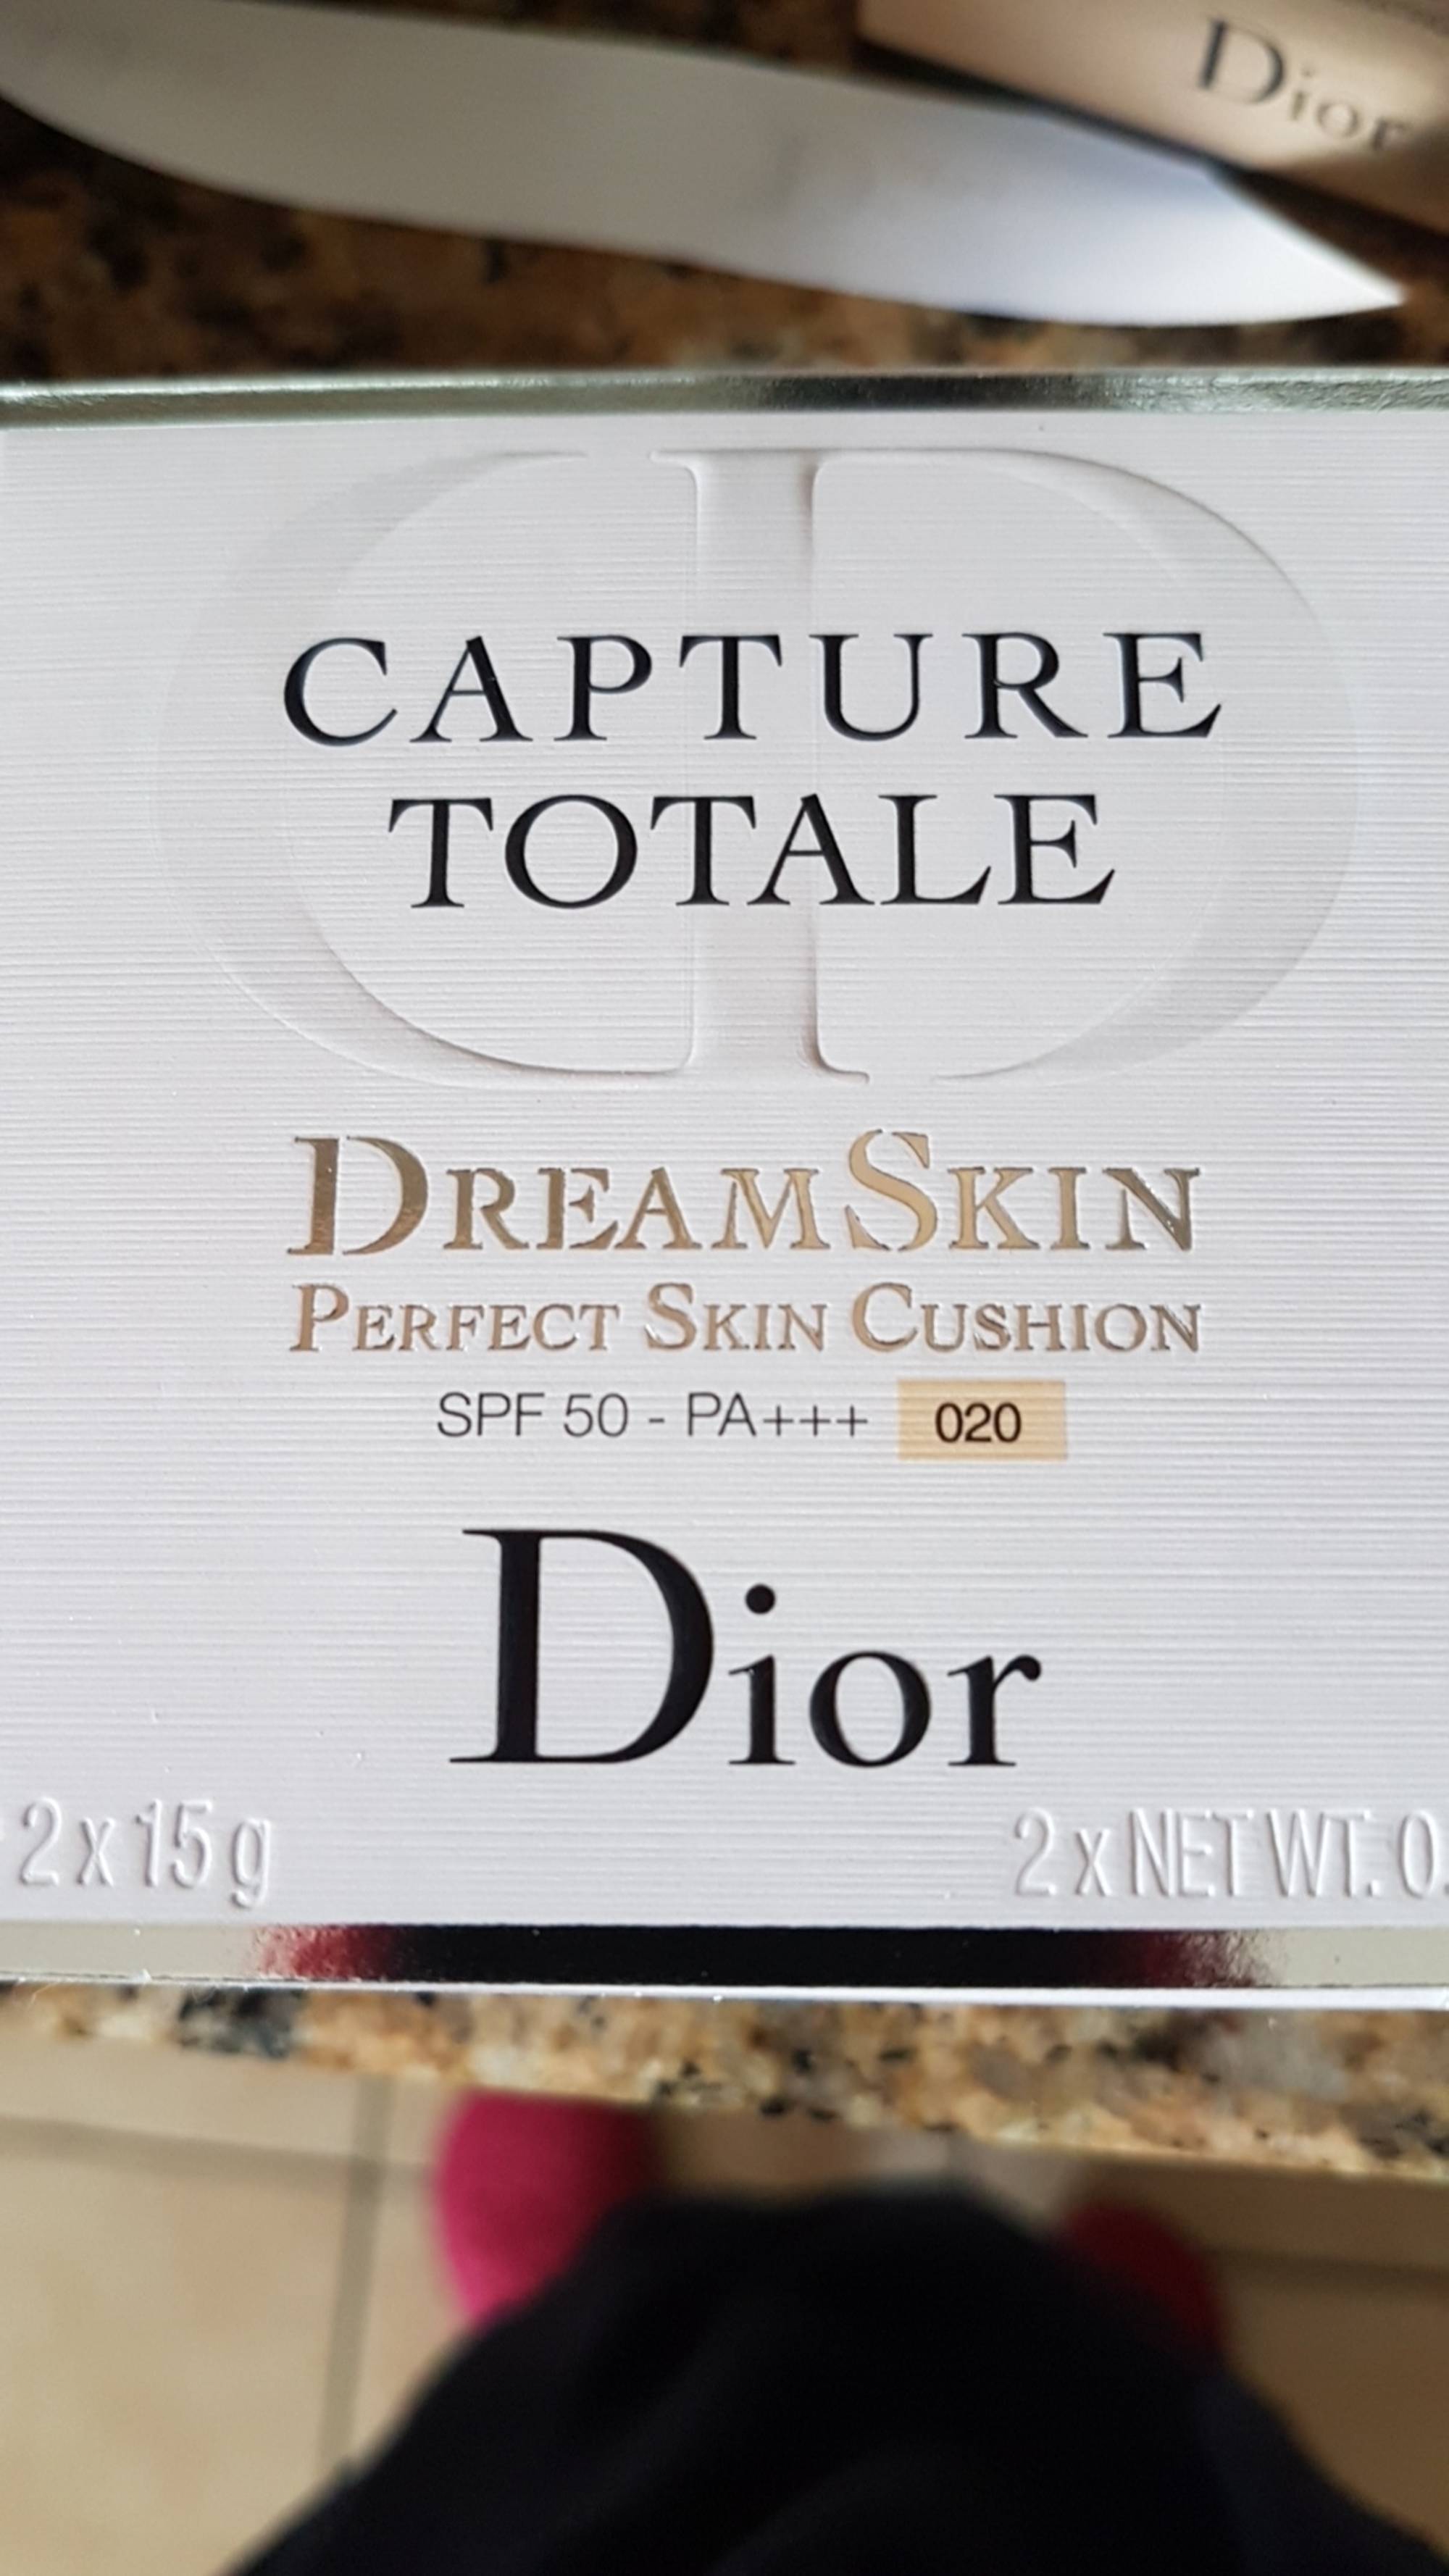 DIOR - Capture totale - Dreamskin perfect skin cushion SPF 50